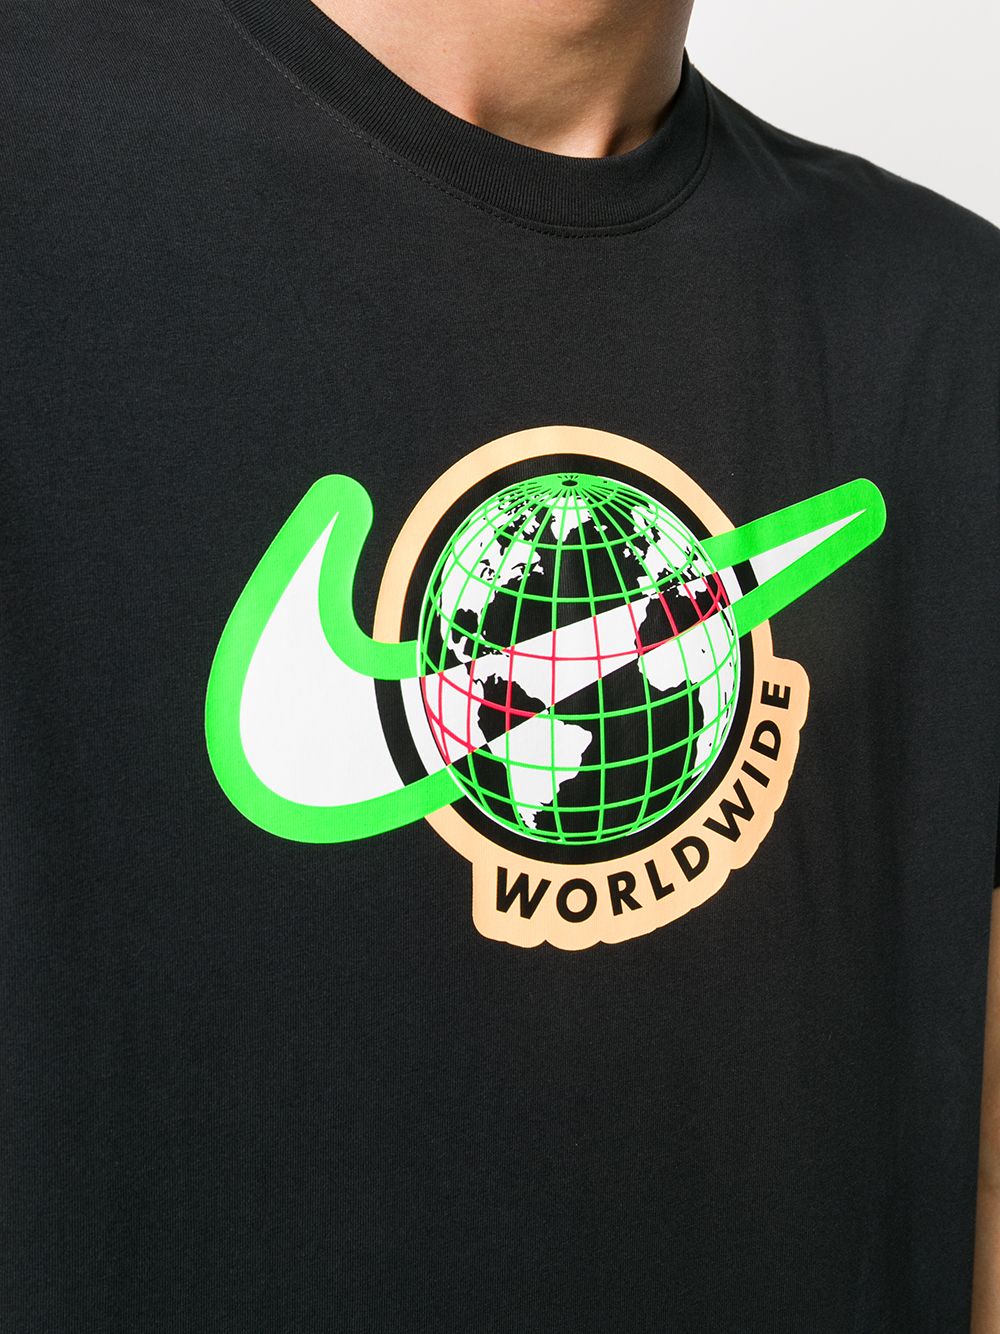 nike world t shirt